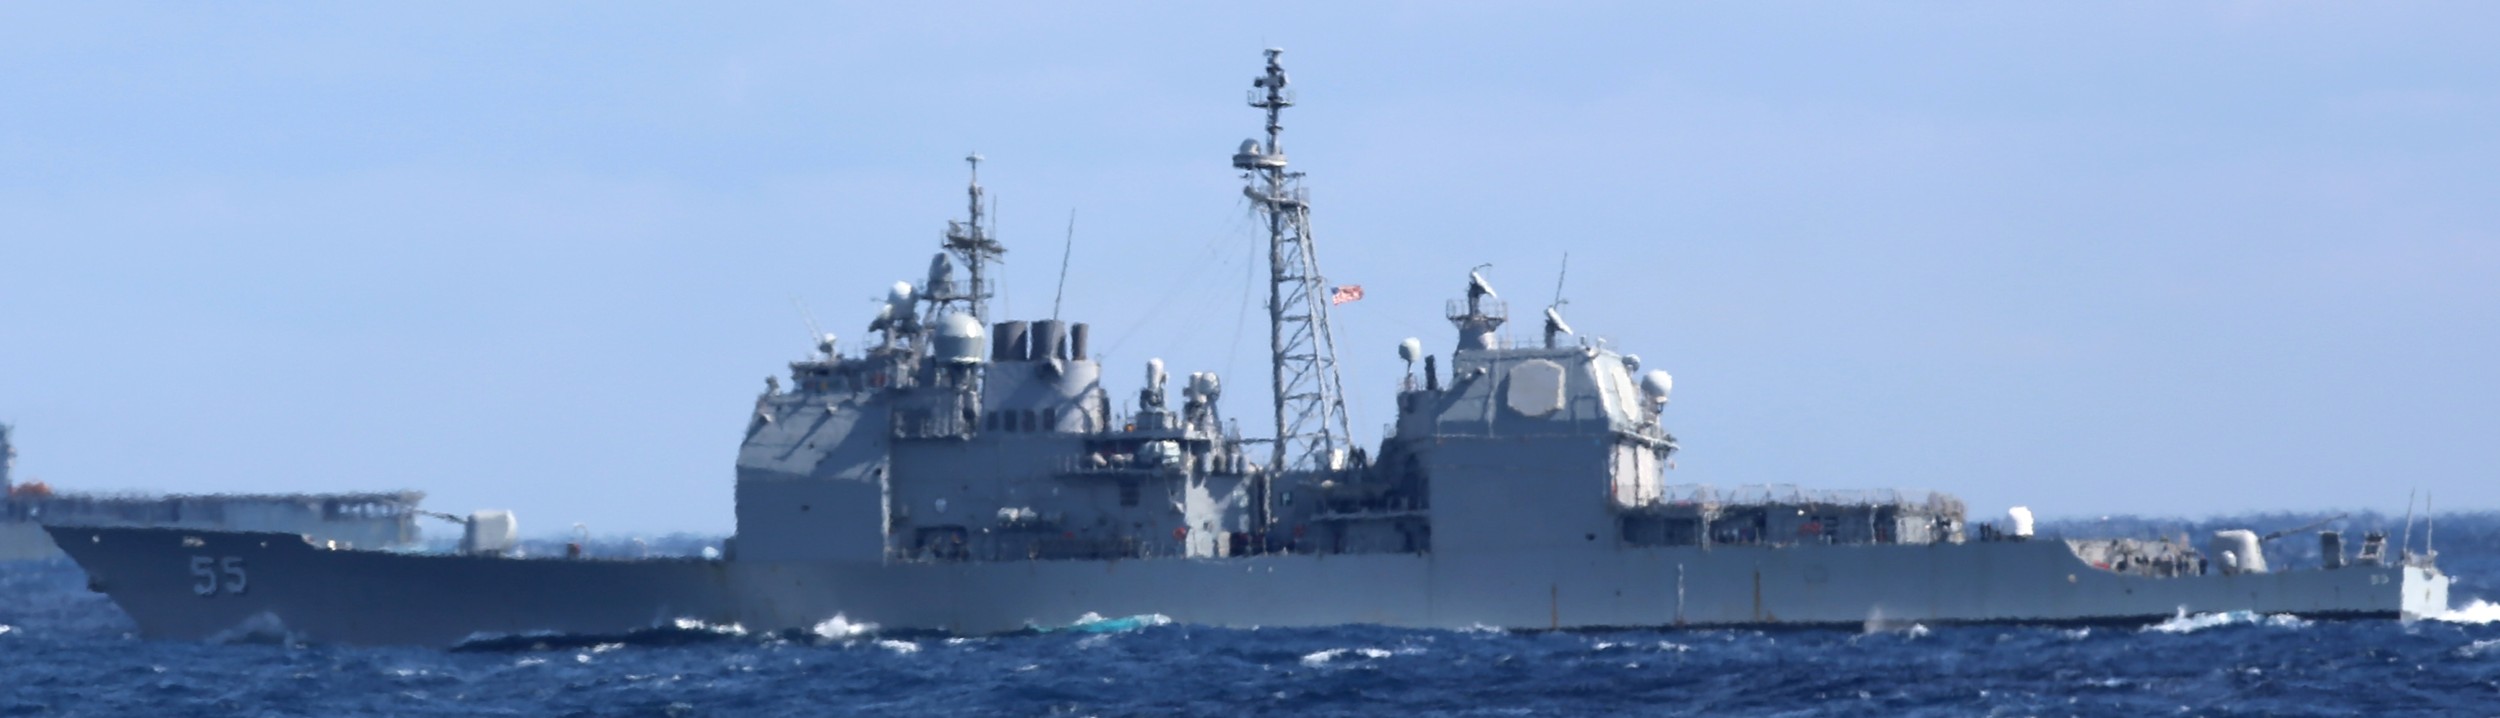 cg-55 uss leyte gulf ticonderoga class guided missile cruiser aegis us navy 39